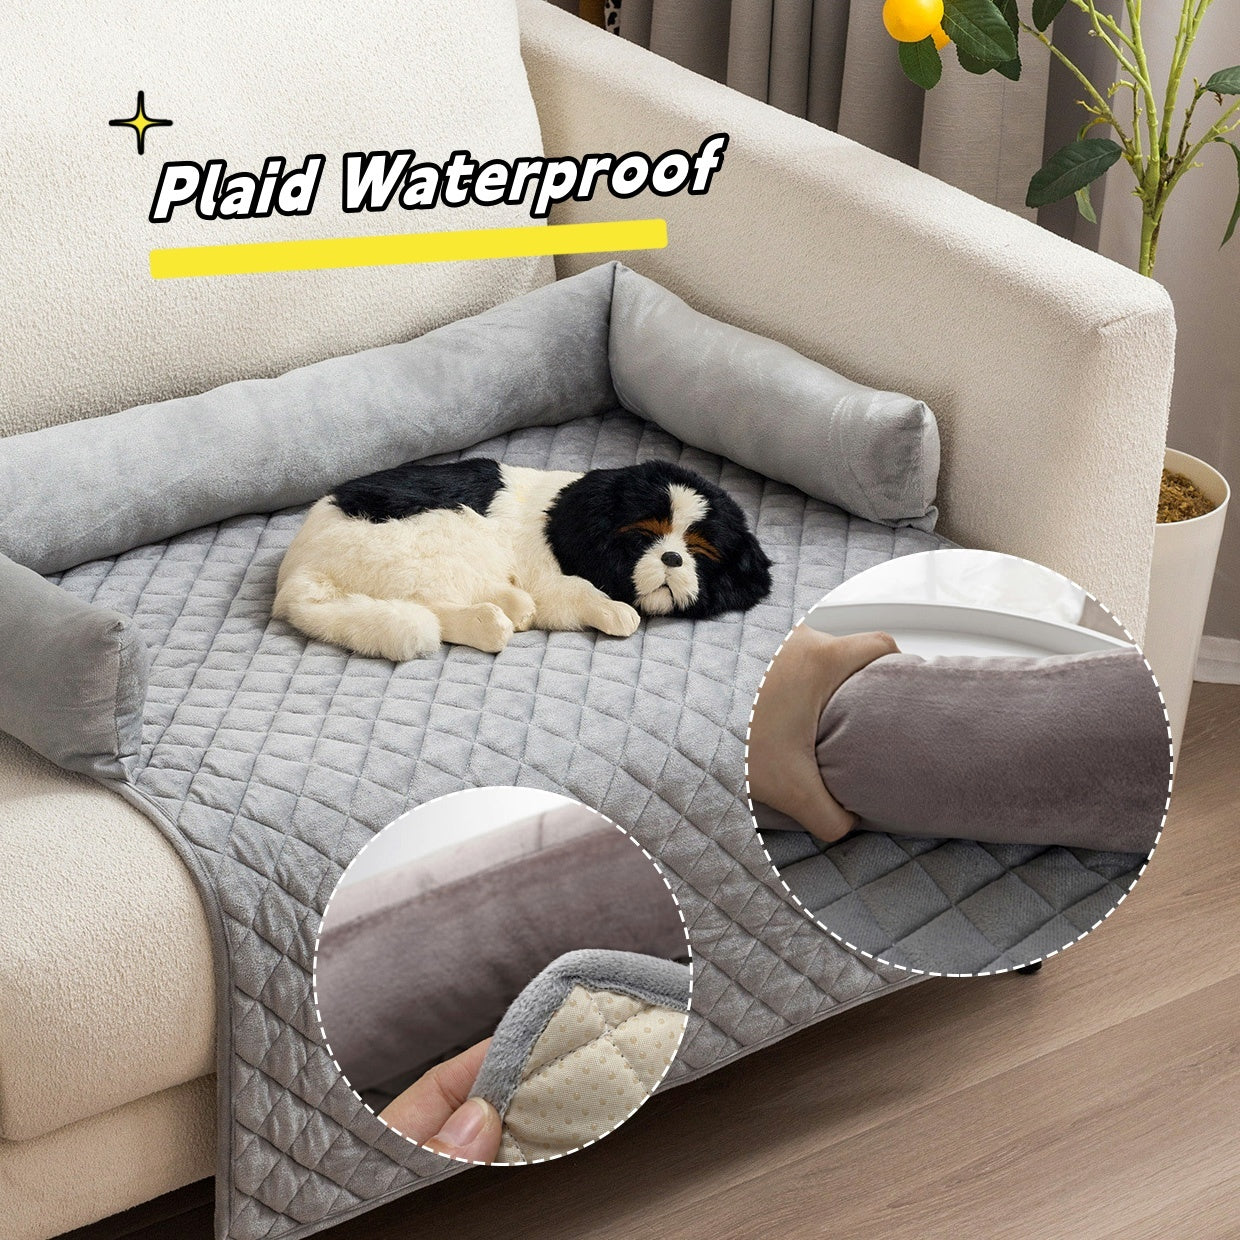 Large dog sofa bed with cushion.